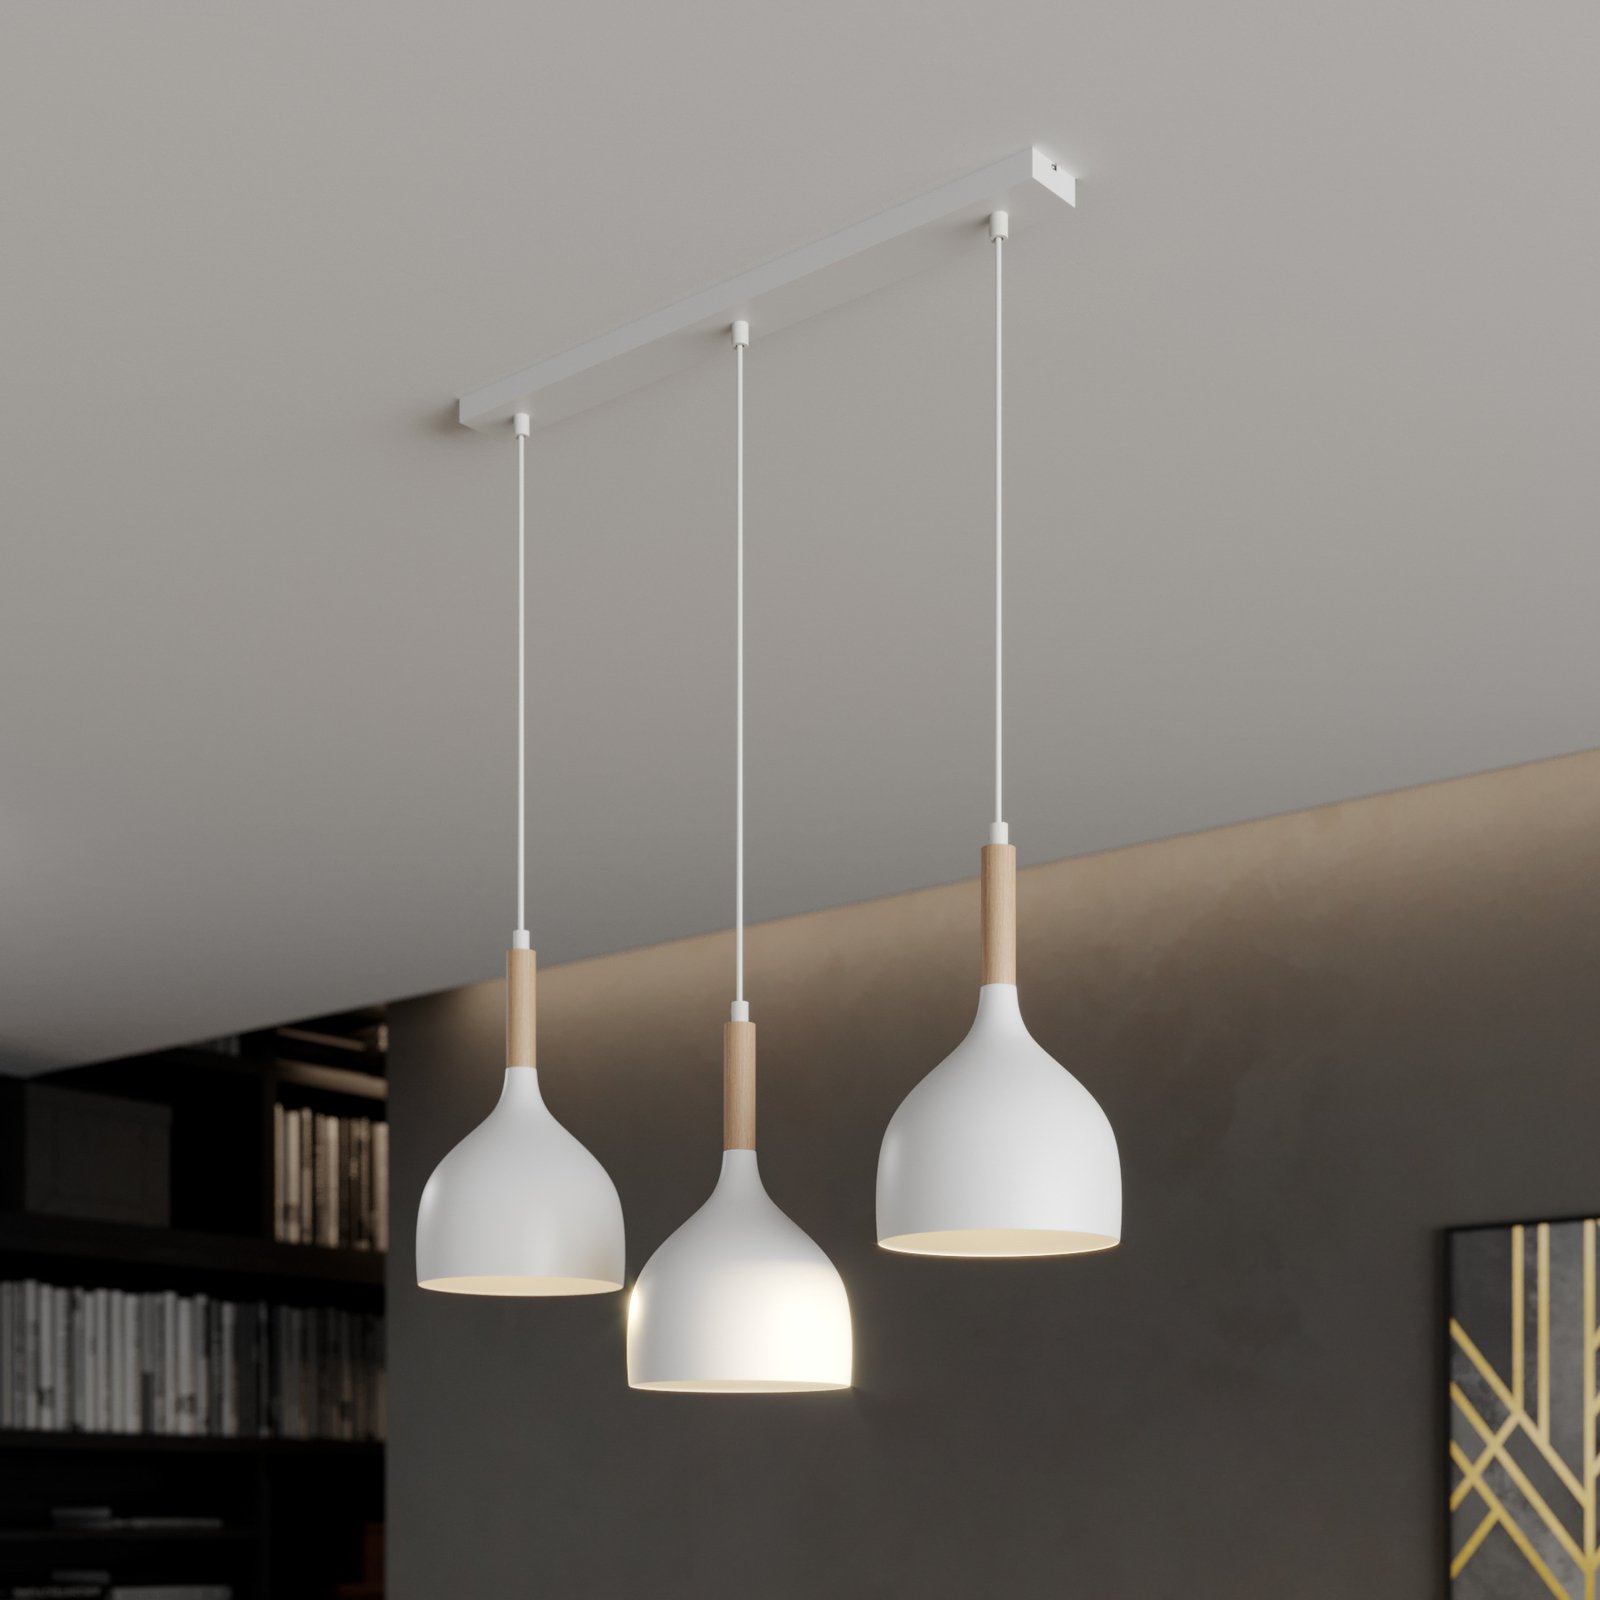 Hanglamp Noak 3-lamps lang wit/hout natuur